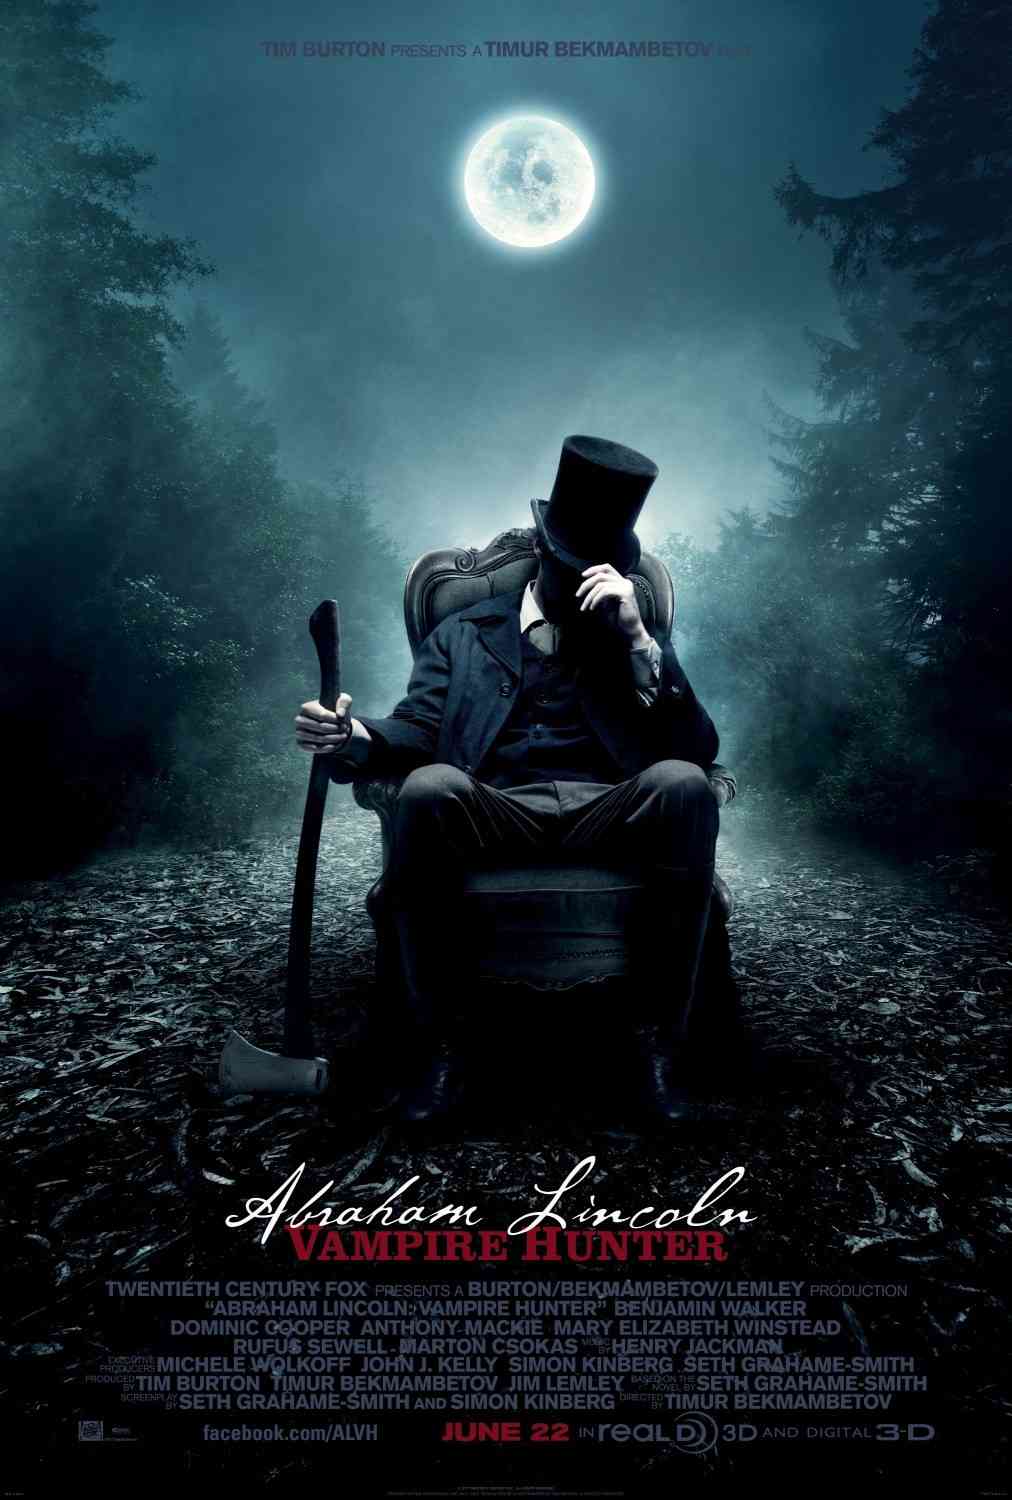 Abraham-Lincoln-Vampire-Hunter